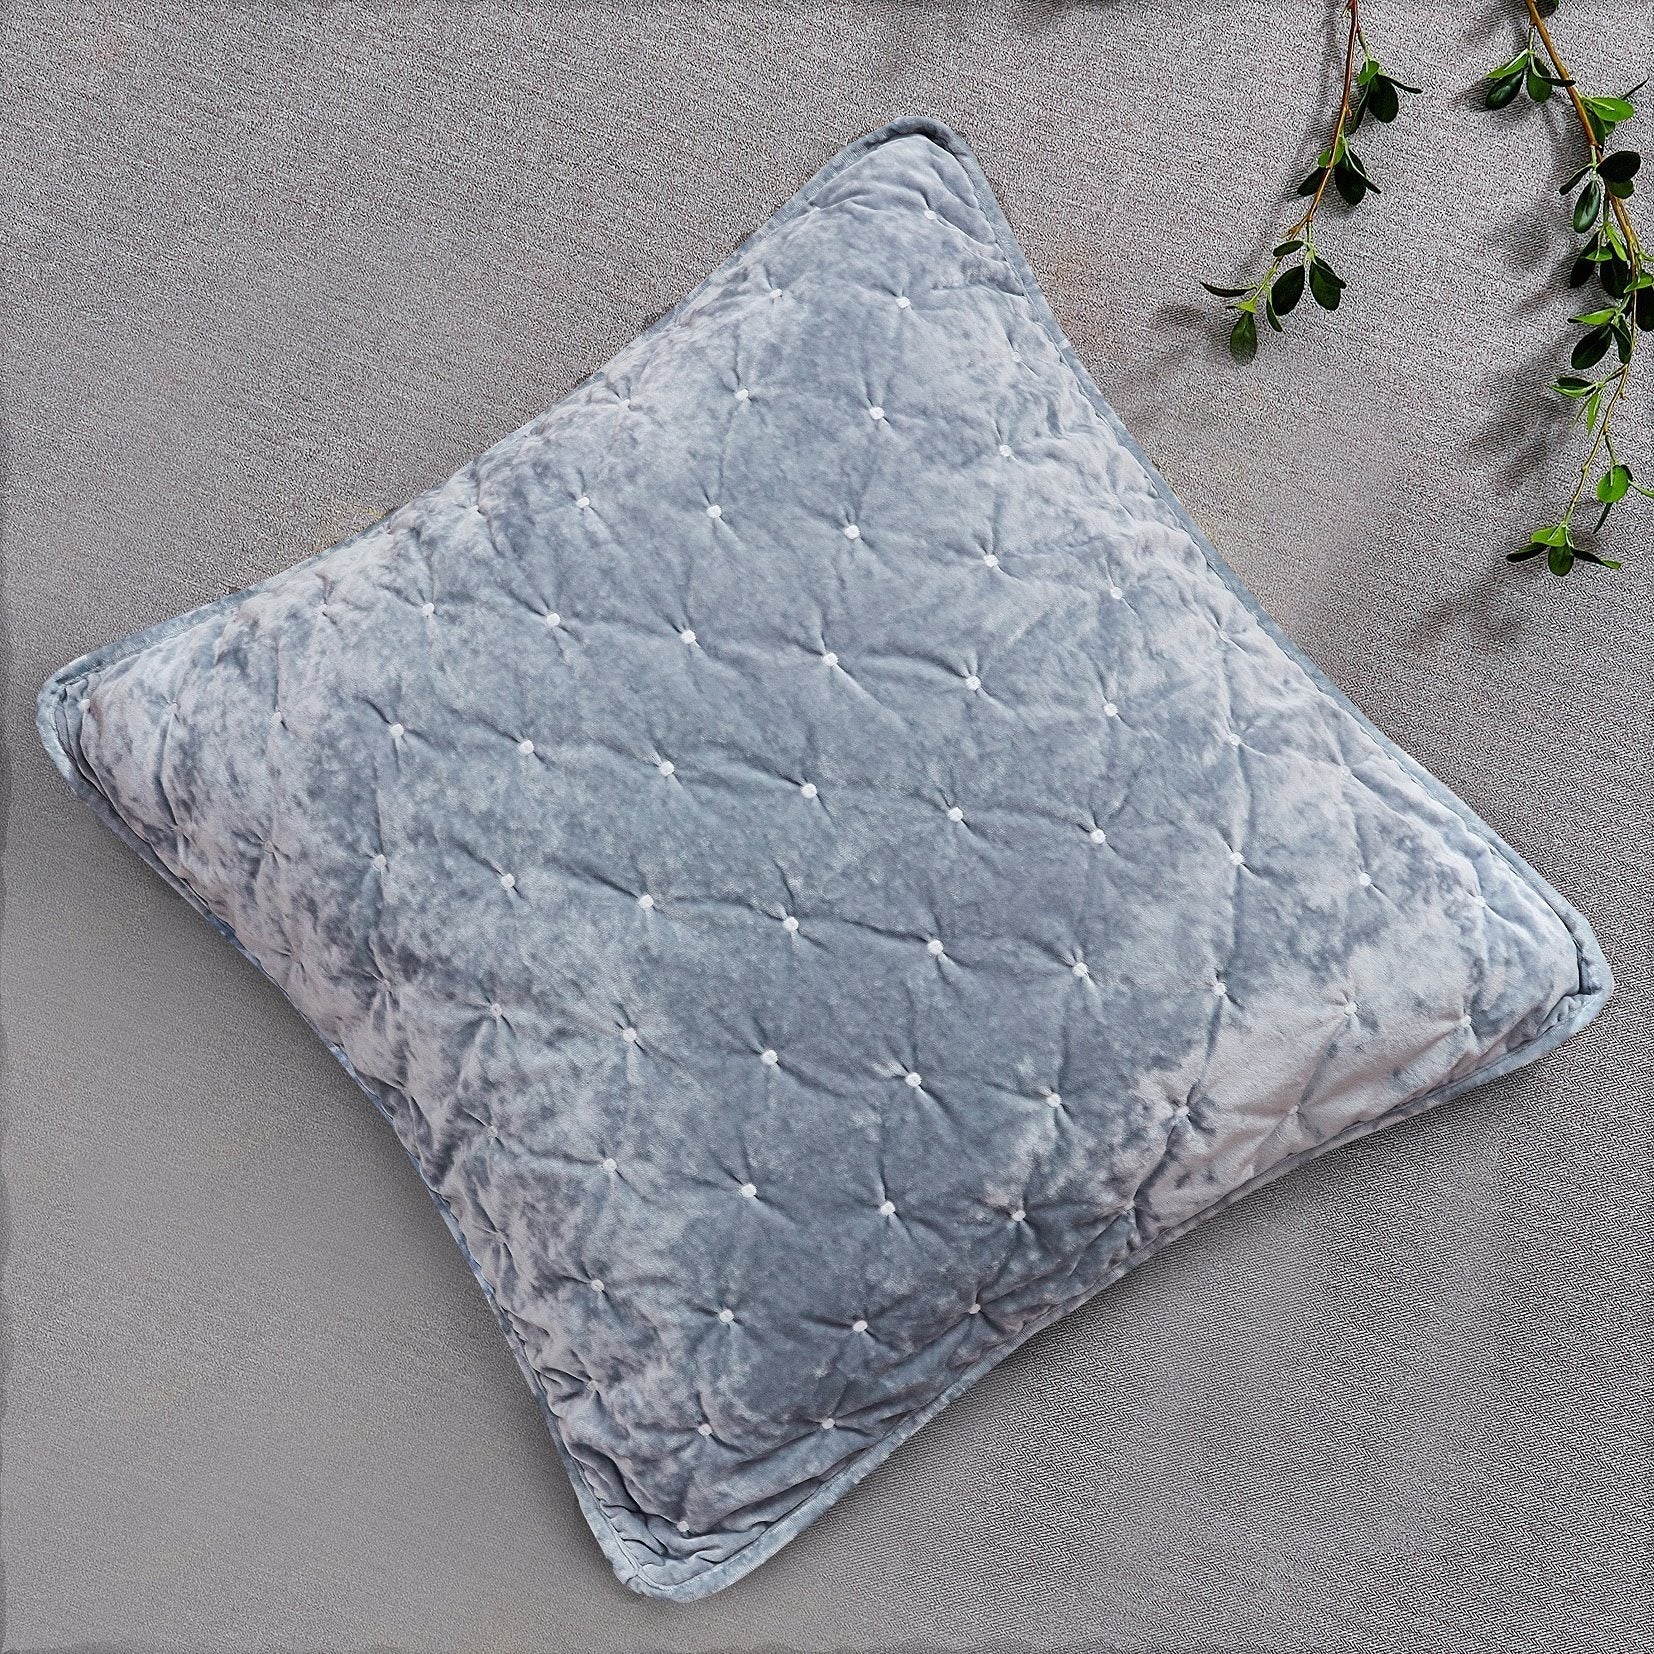 Tache Velvet Dreams Light Blue Plush Diamond Tufted Cushion Covers / Euro Sham (JHW-853LB) - Tache Home Fashion